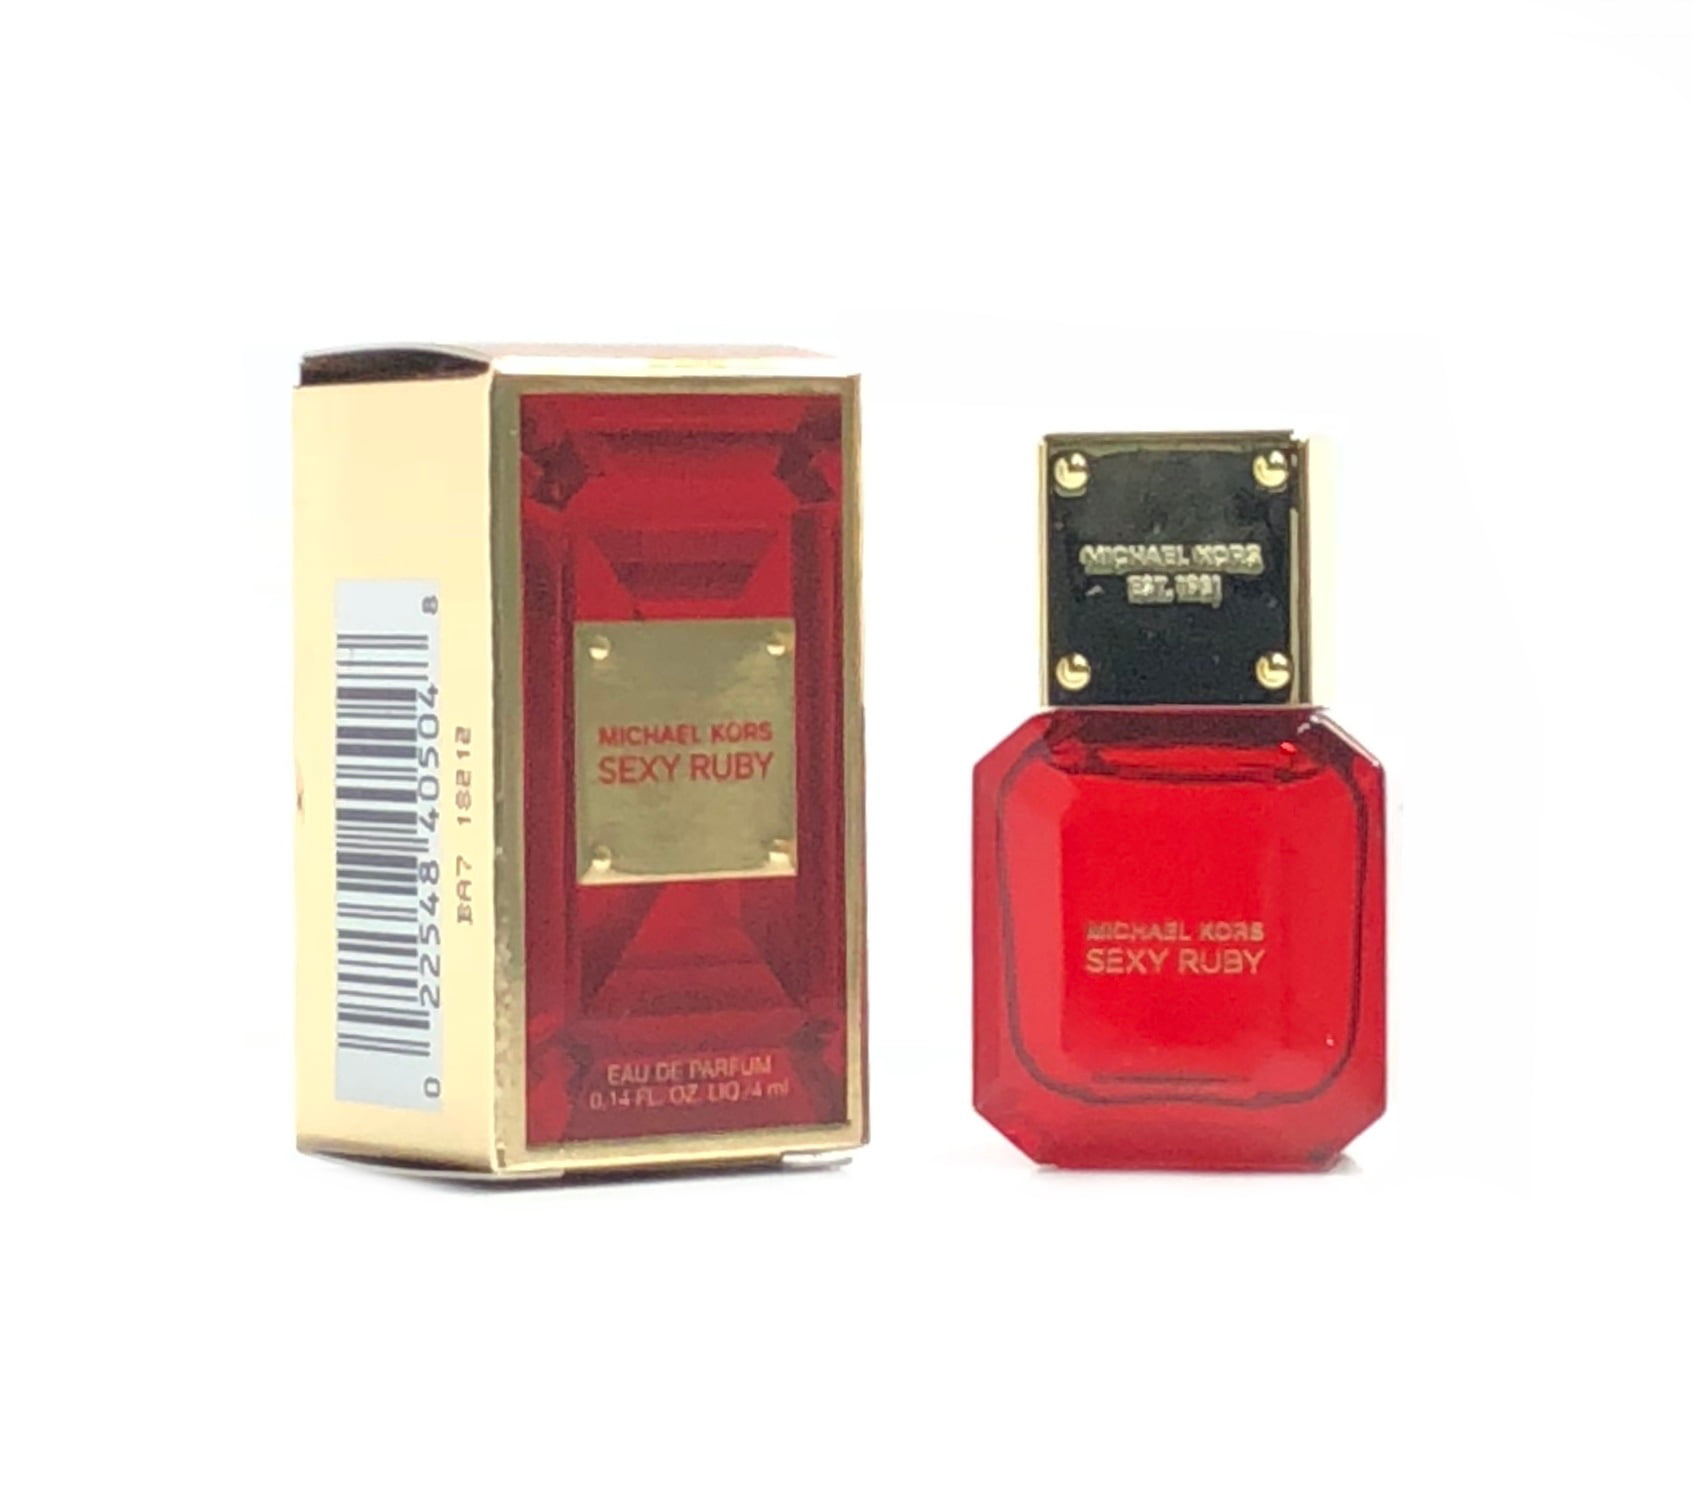 MICHAEL KORS SEXY RUBY PERFUME Eau de Parfum Spray 34oz 100ml New Without  Box  eBay